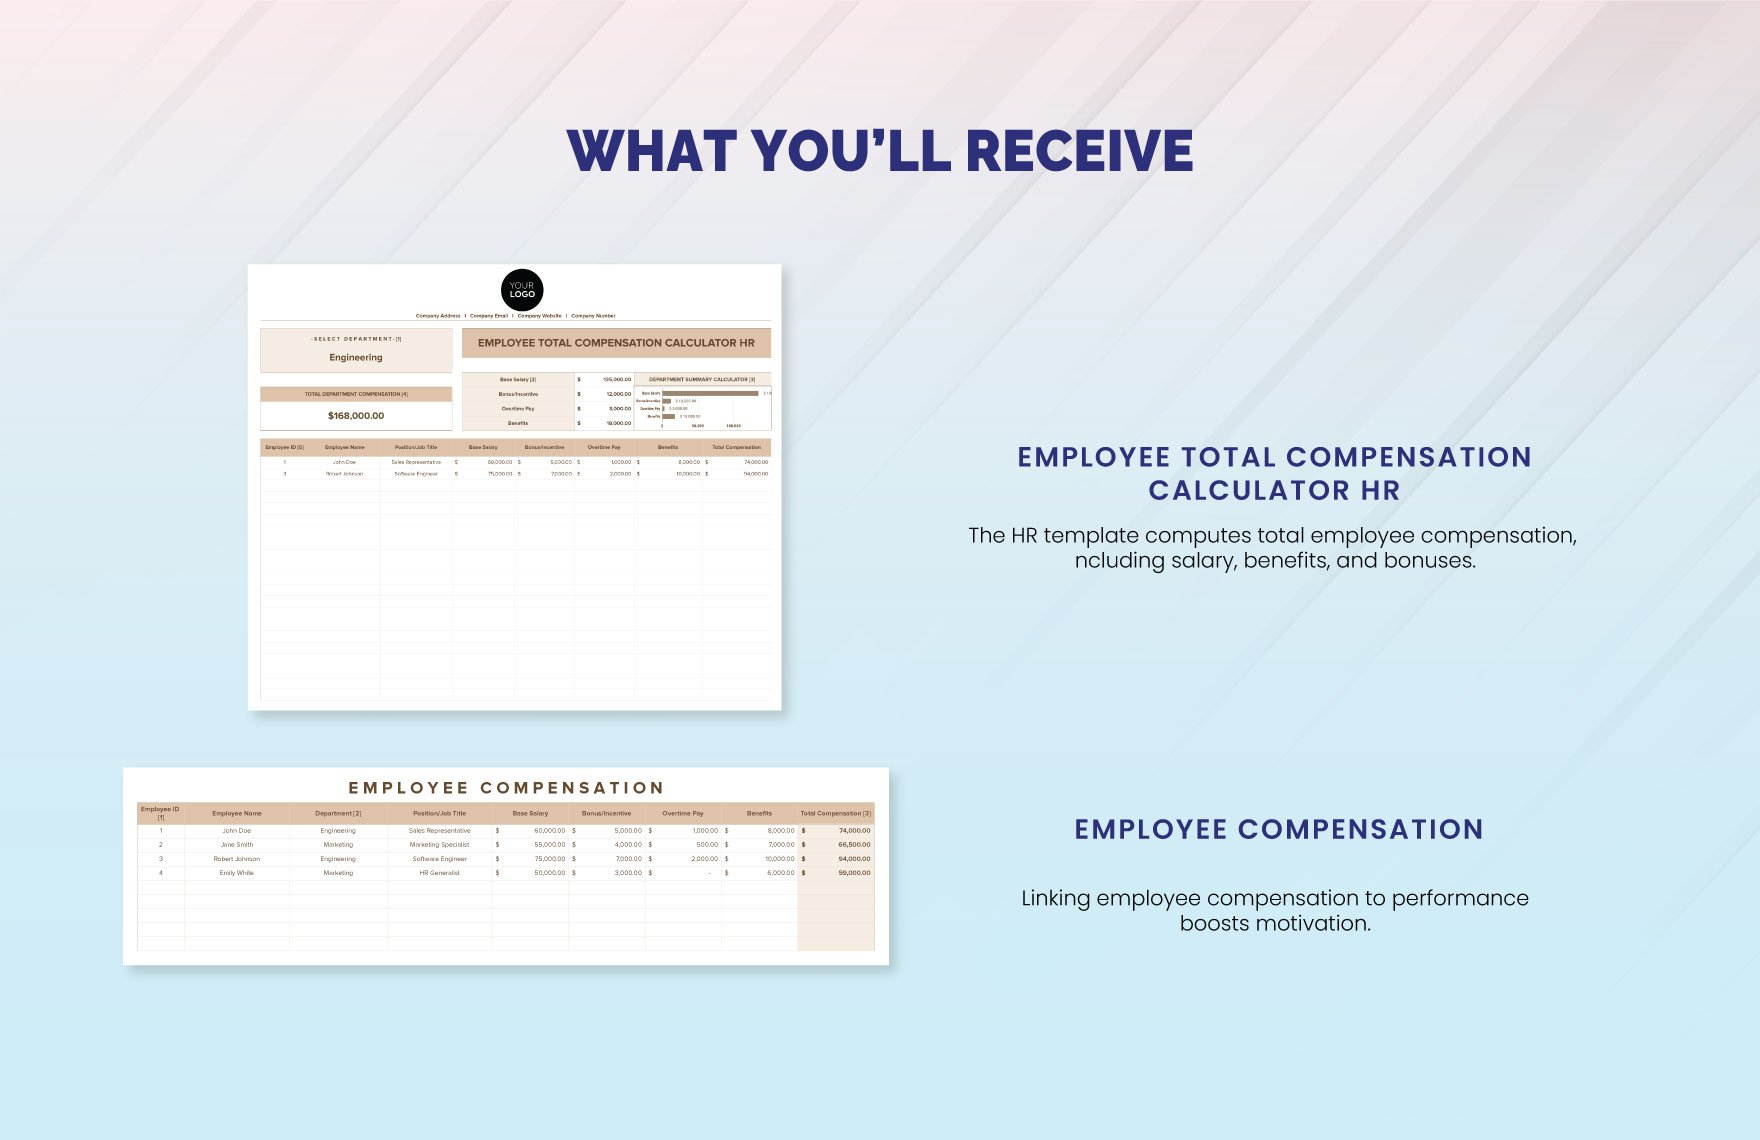 Employee Total Compensation Calculator HR Template